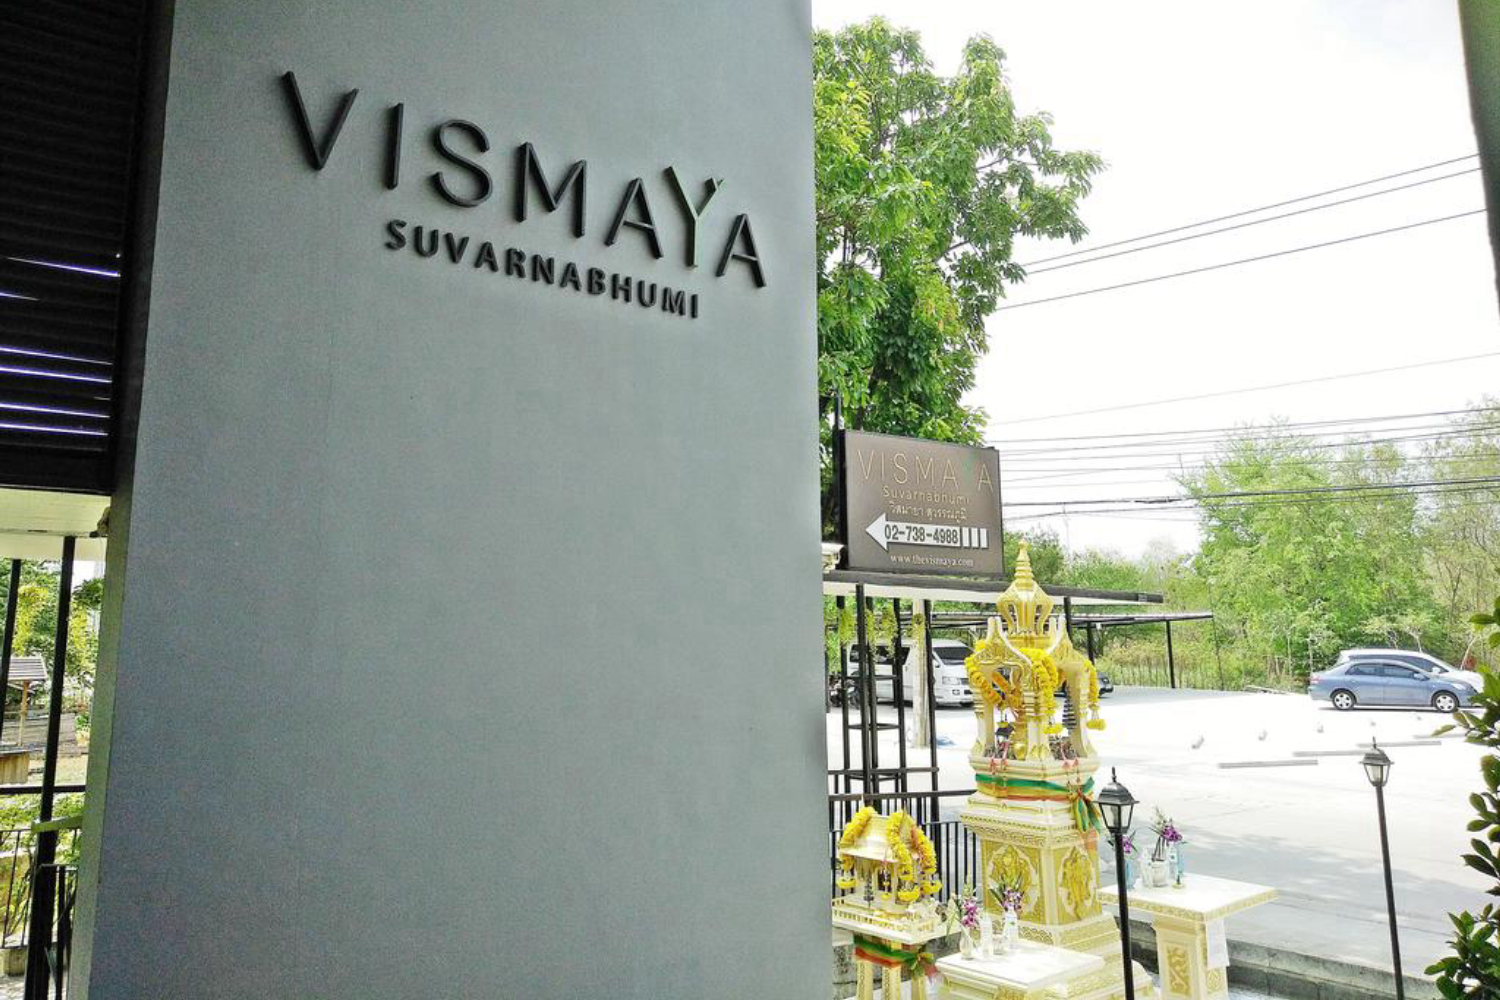 Vismaya Suvarnabhumi Airport Hotel - Image 3